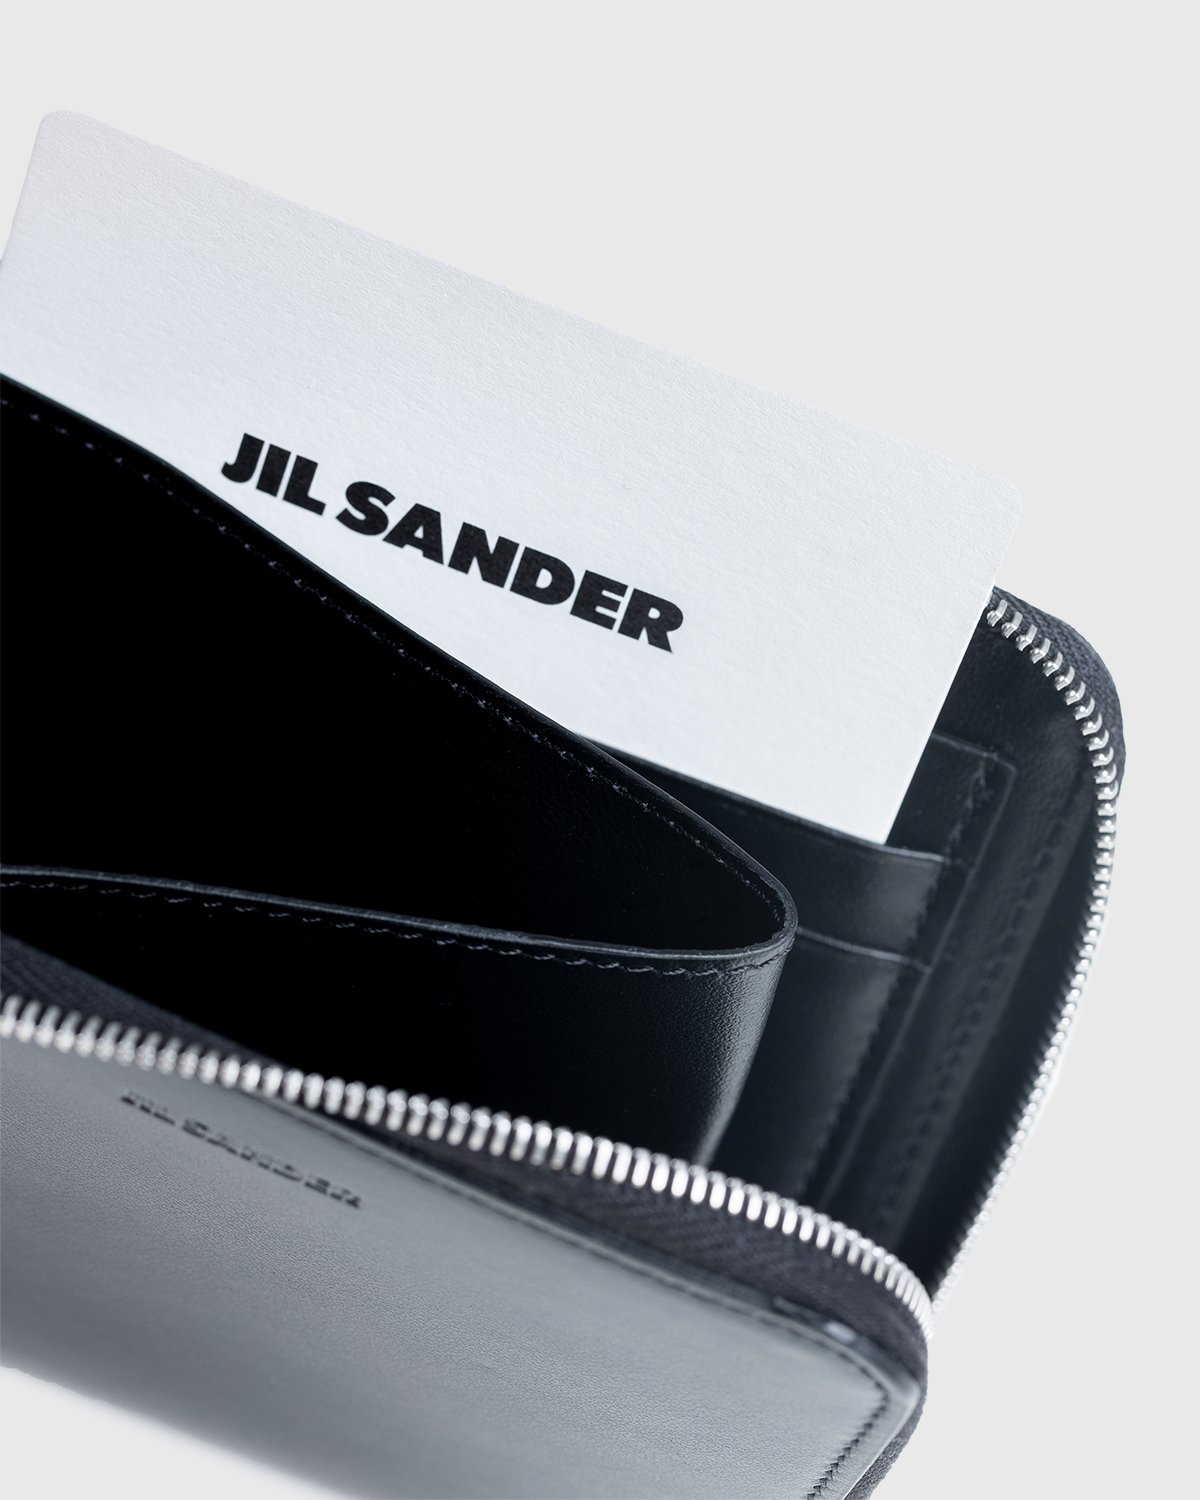 Jil Sander - Credit Card Purse Black - Accessories - Black - Image 6